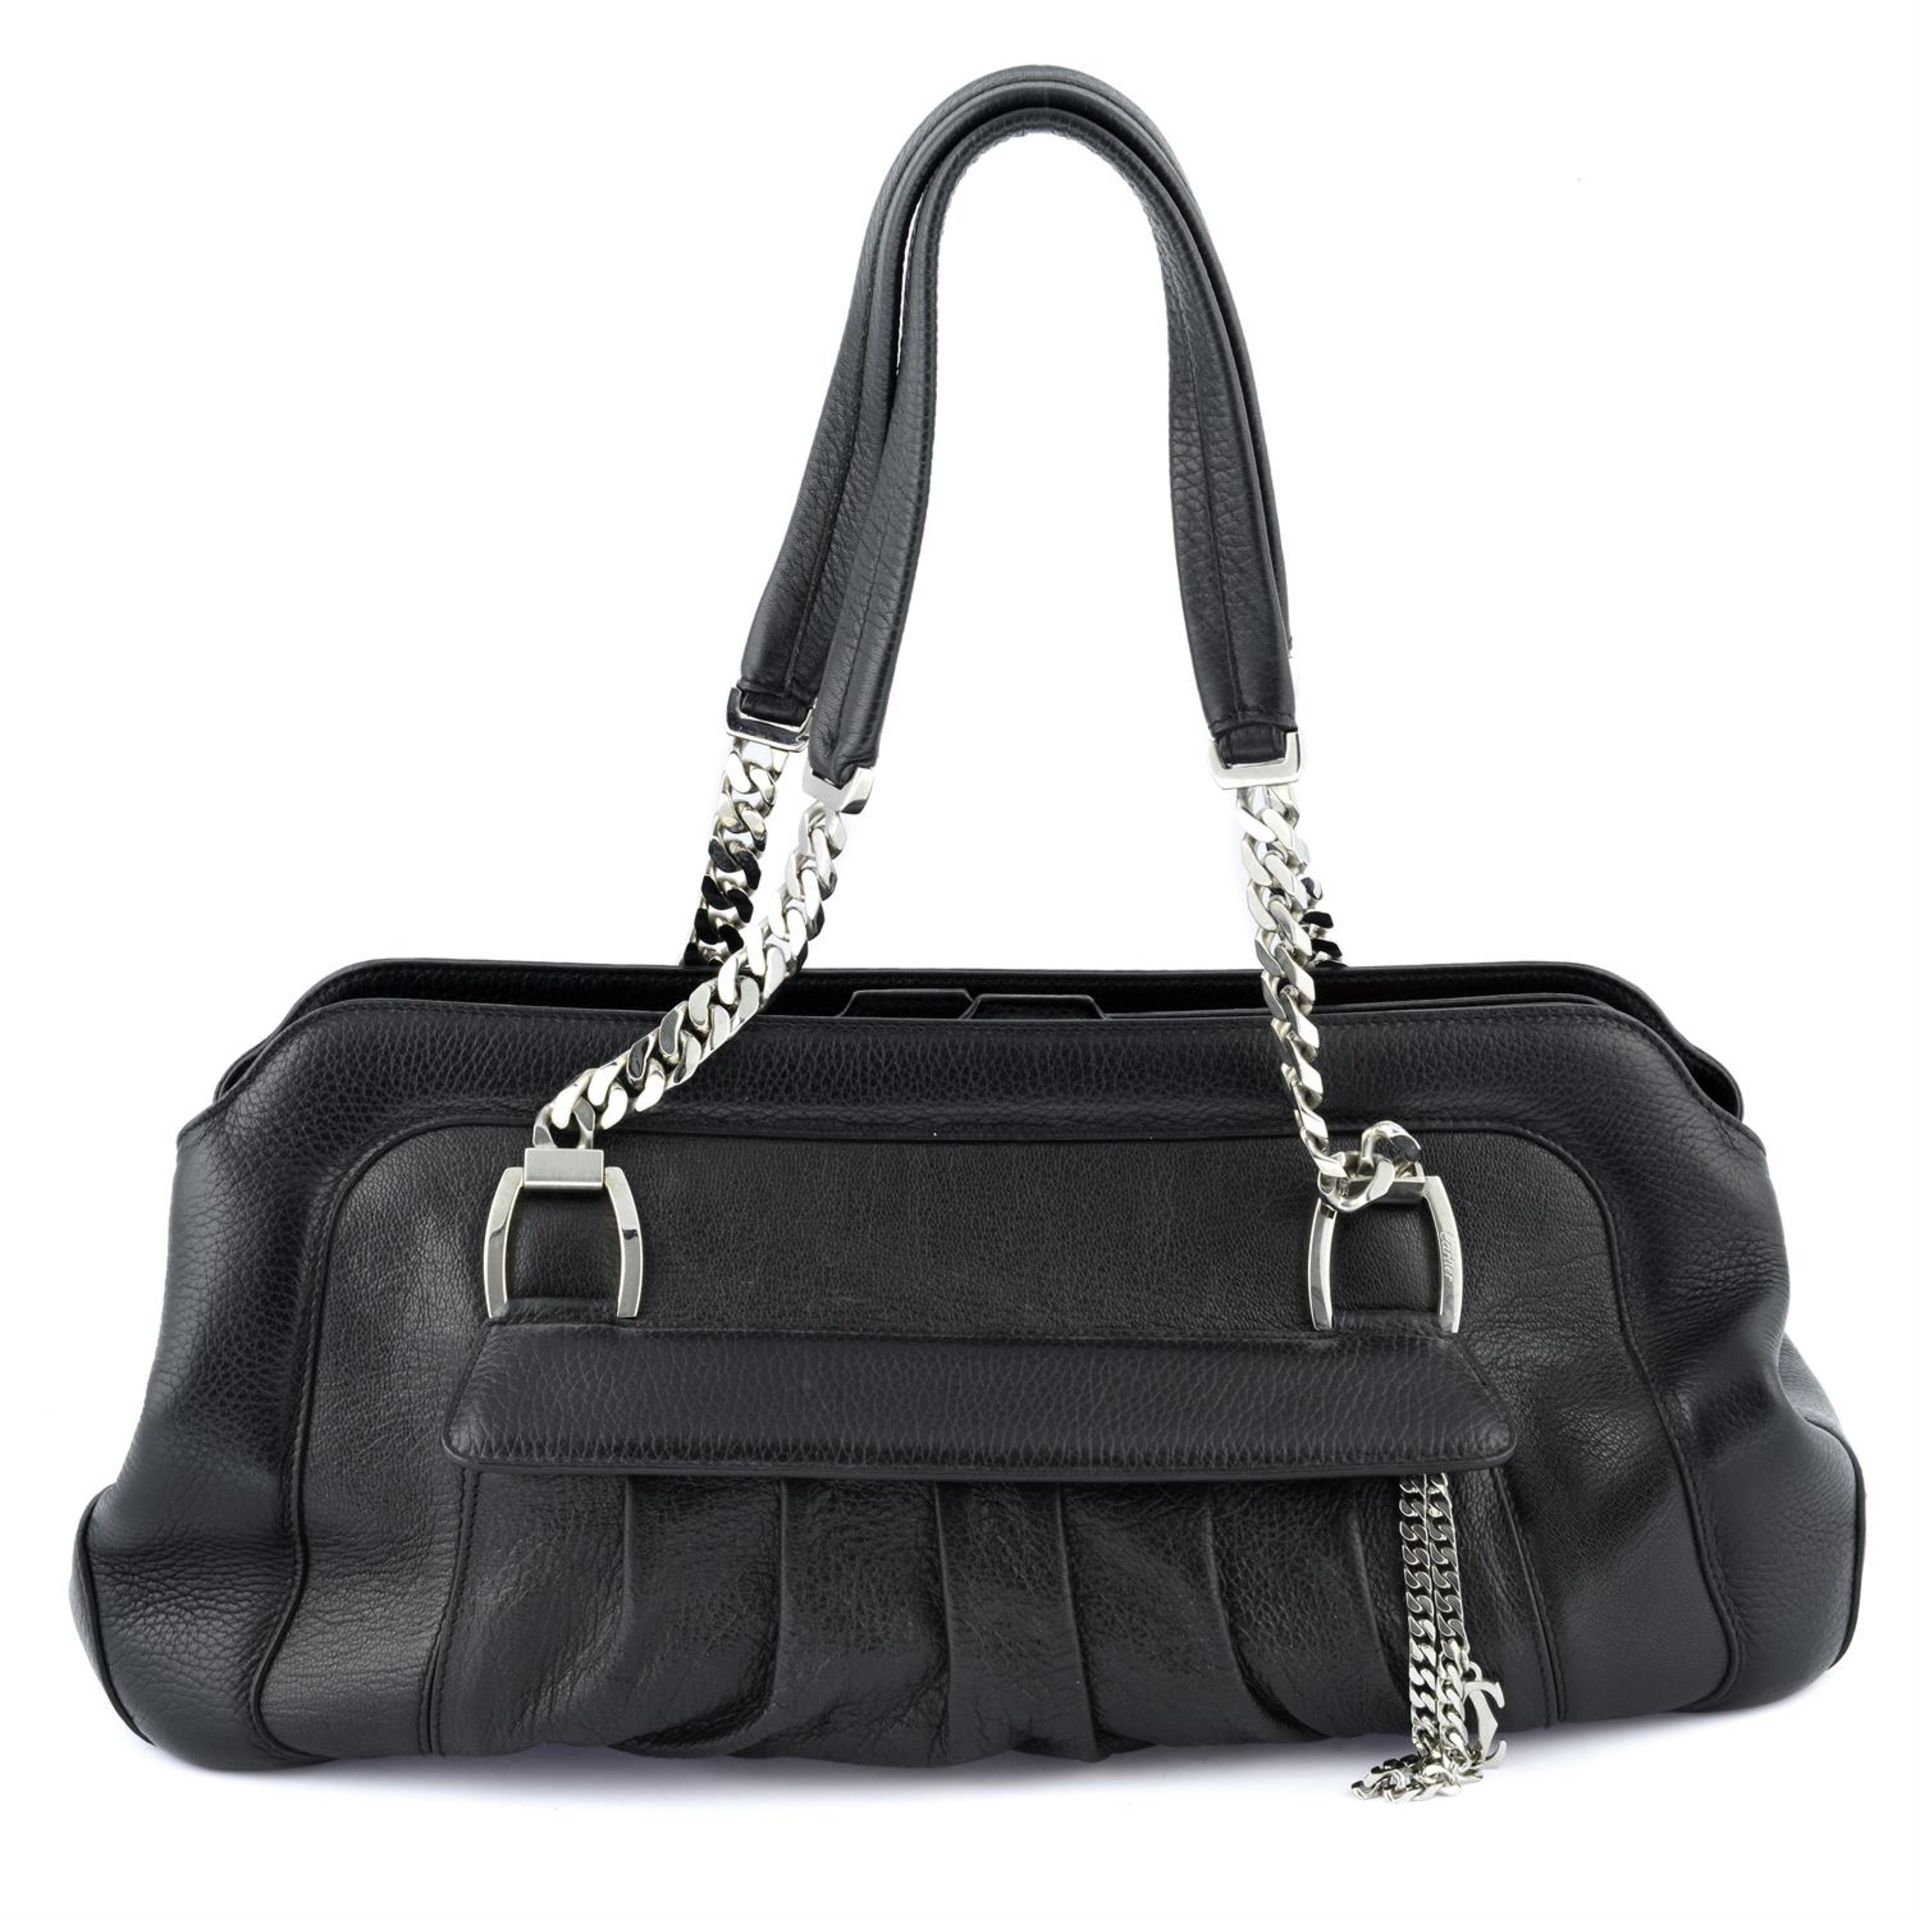 CARTIER - a black leather Multi-Pocket handbag.m